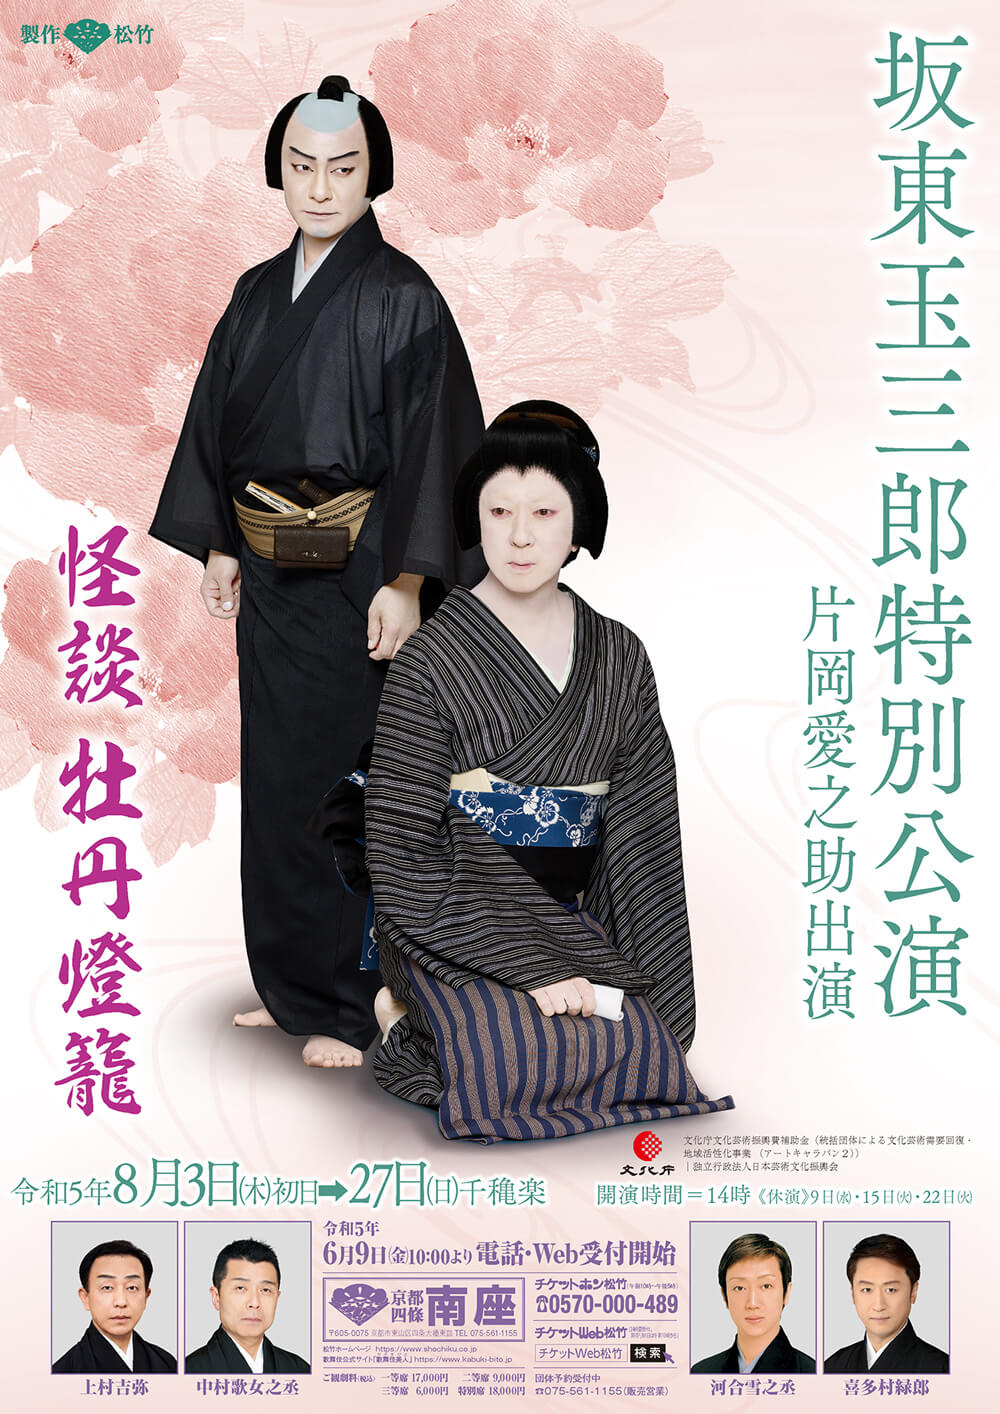 August Program at the Minamiza Theatre